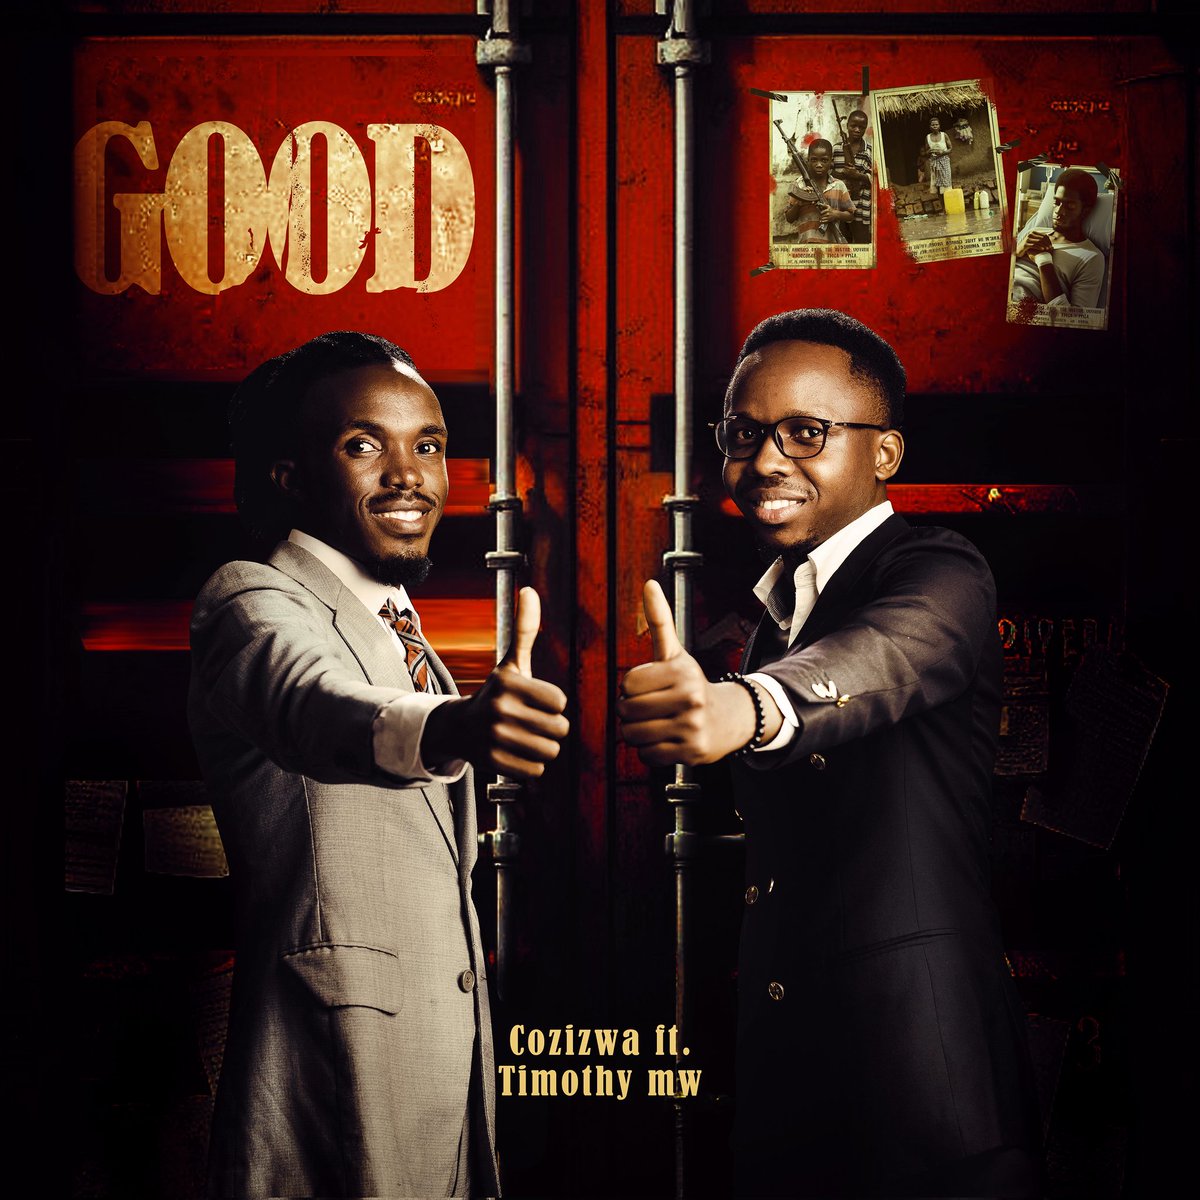 Listen to  this amazing song #Good
Cozizwa X Timothy Mw🔥
youtu.be/JwqpDLcrnuk?si…

#Controllerchronicles